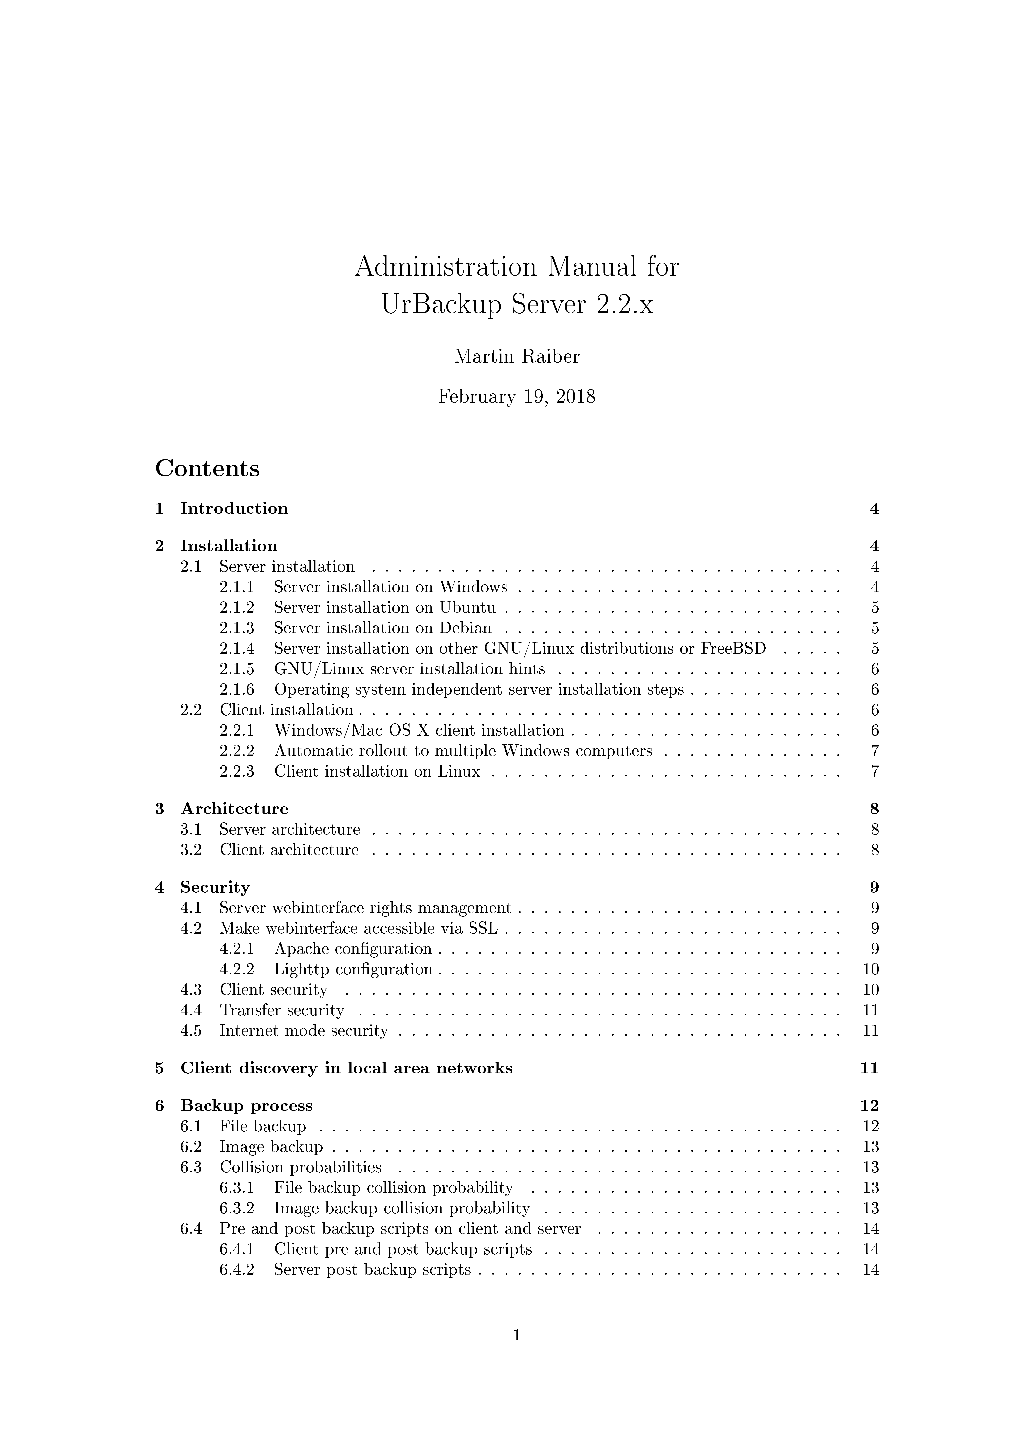 Administration Manual for Urbackup Server 2.2.X